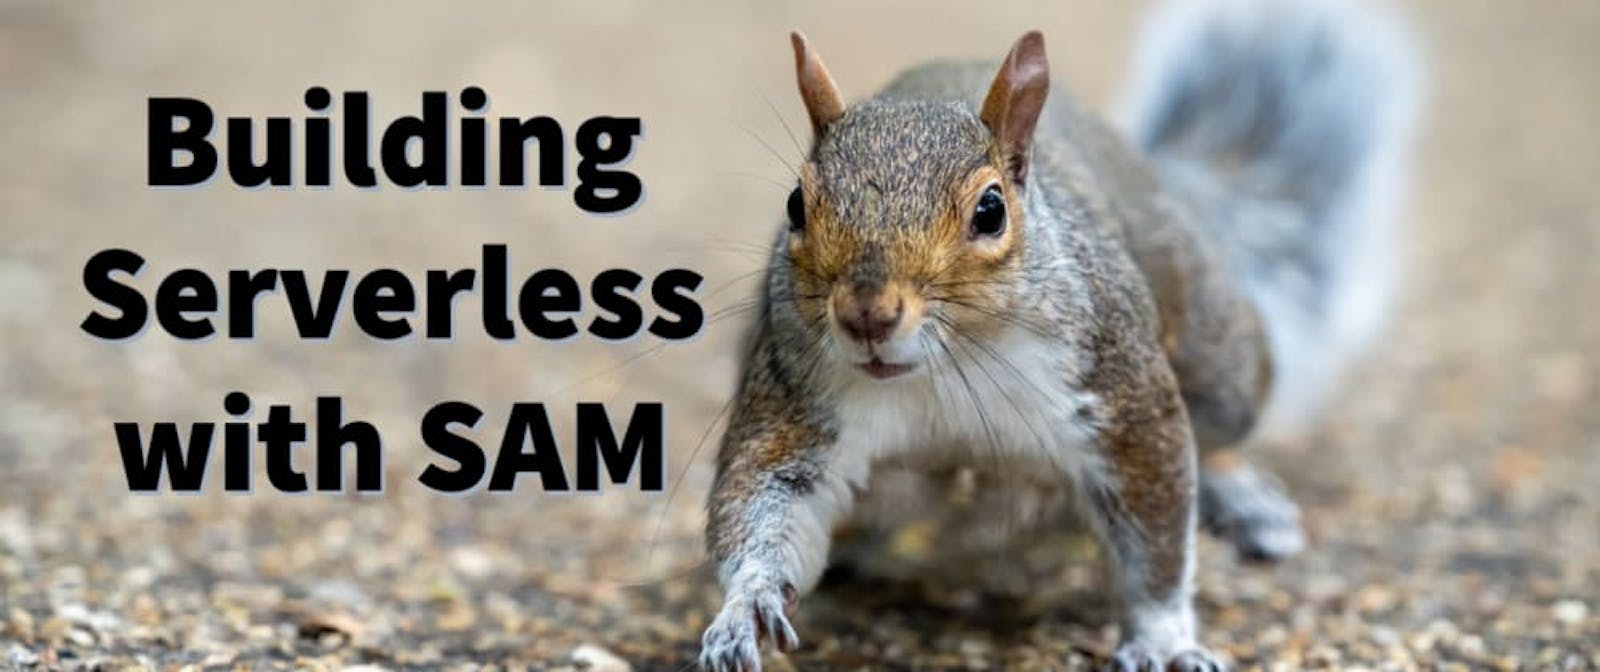 Building Serverless with SAM